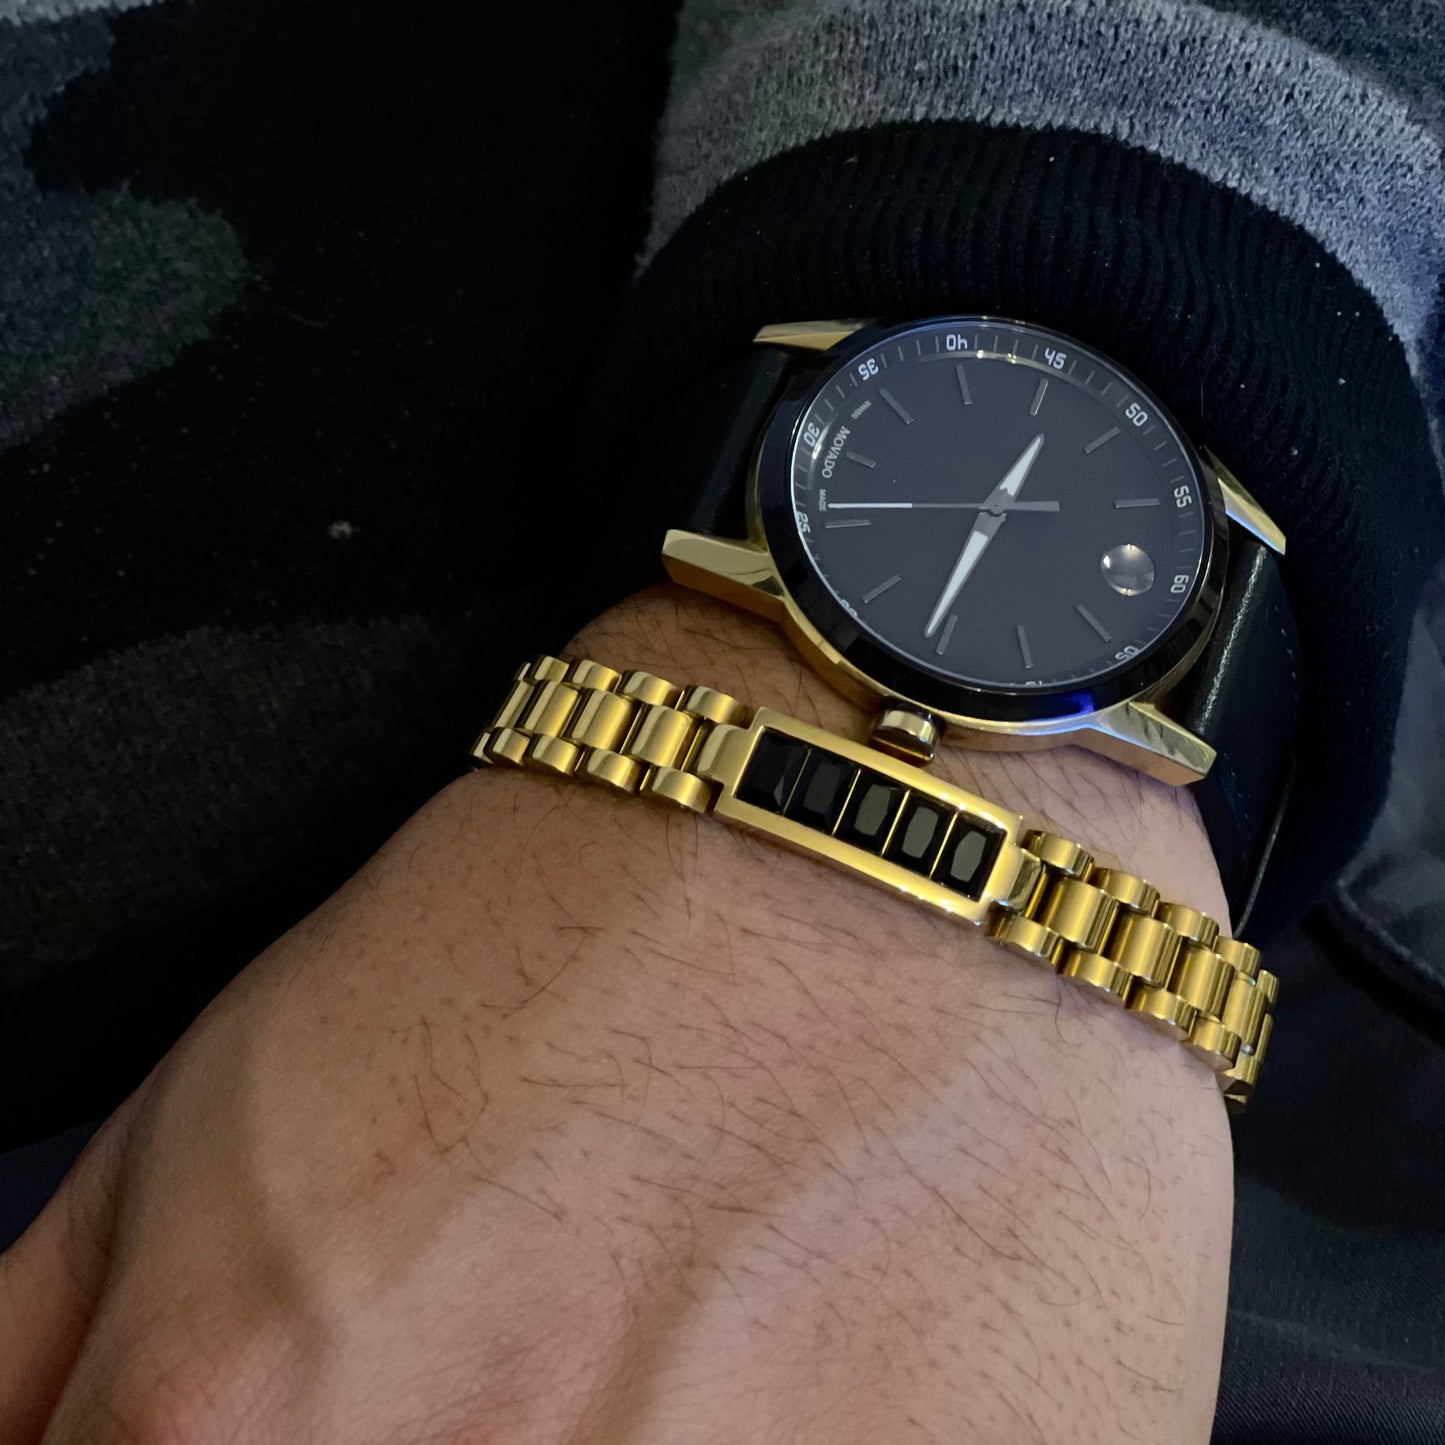 Night Timekeeper Watch Strap Bracelet - Gold and Black